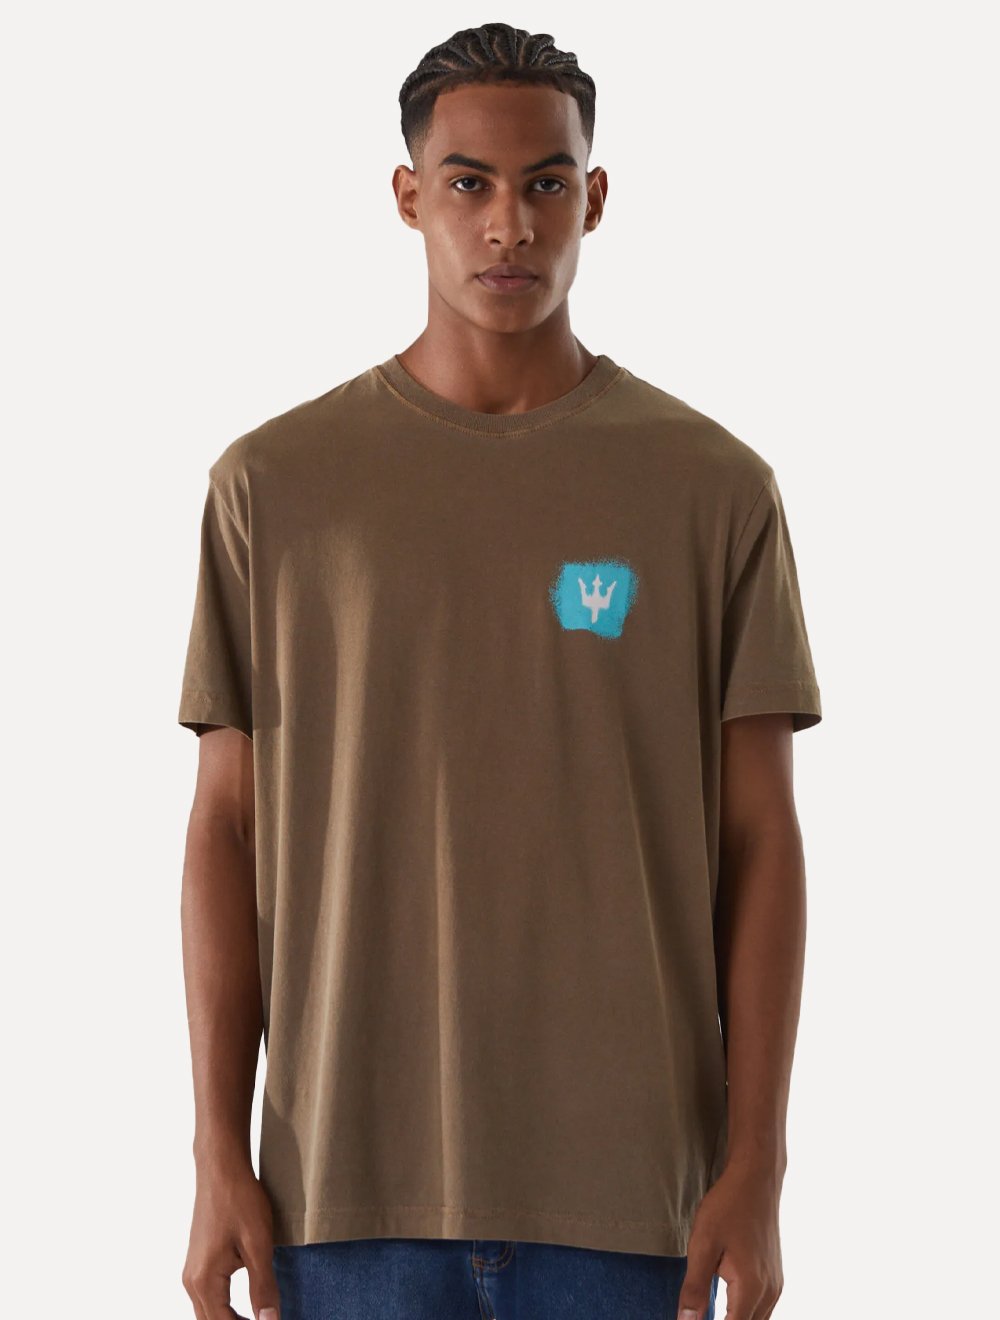 Camiseta Osklen Masculina Regular Stone Sprayicon Cáqui Escuro